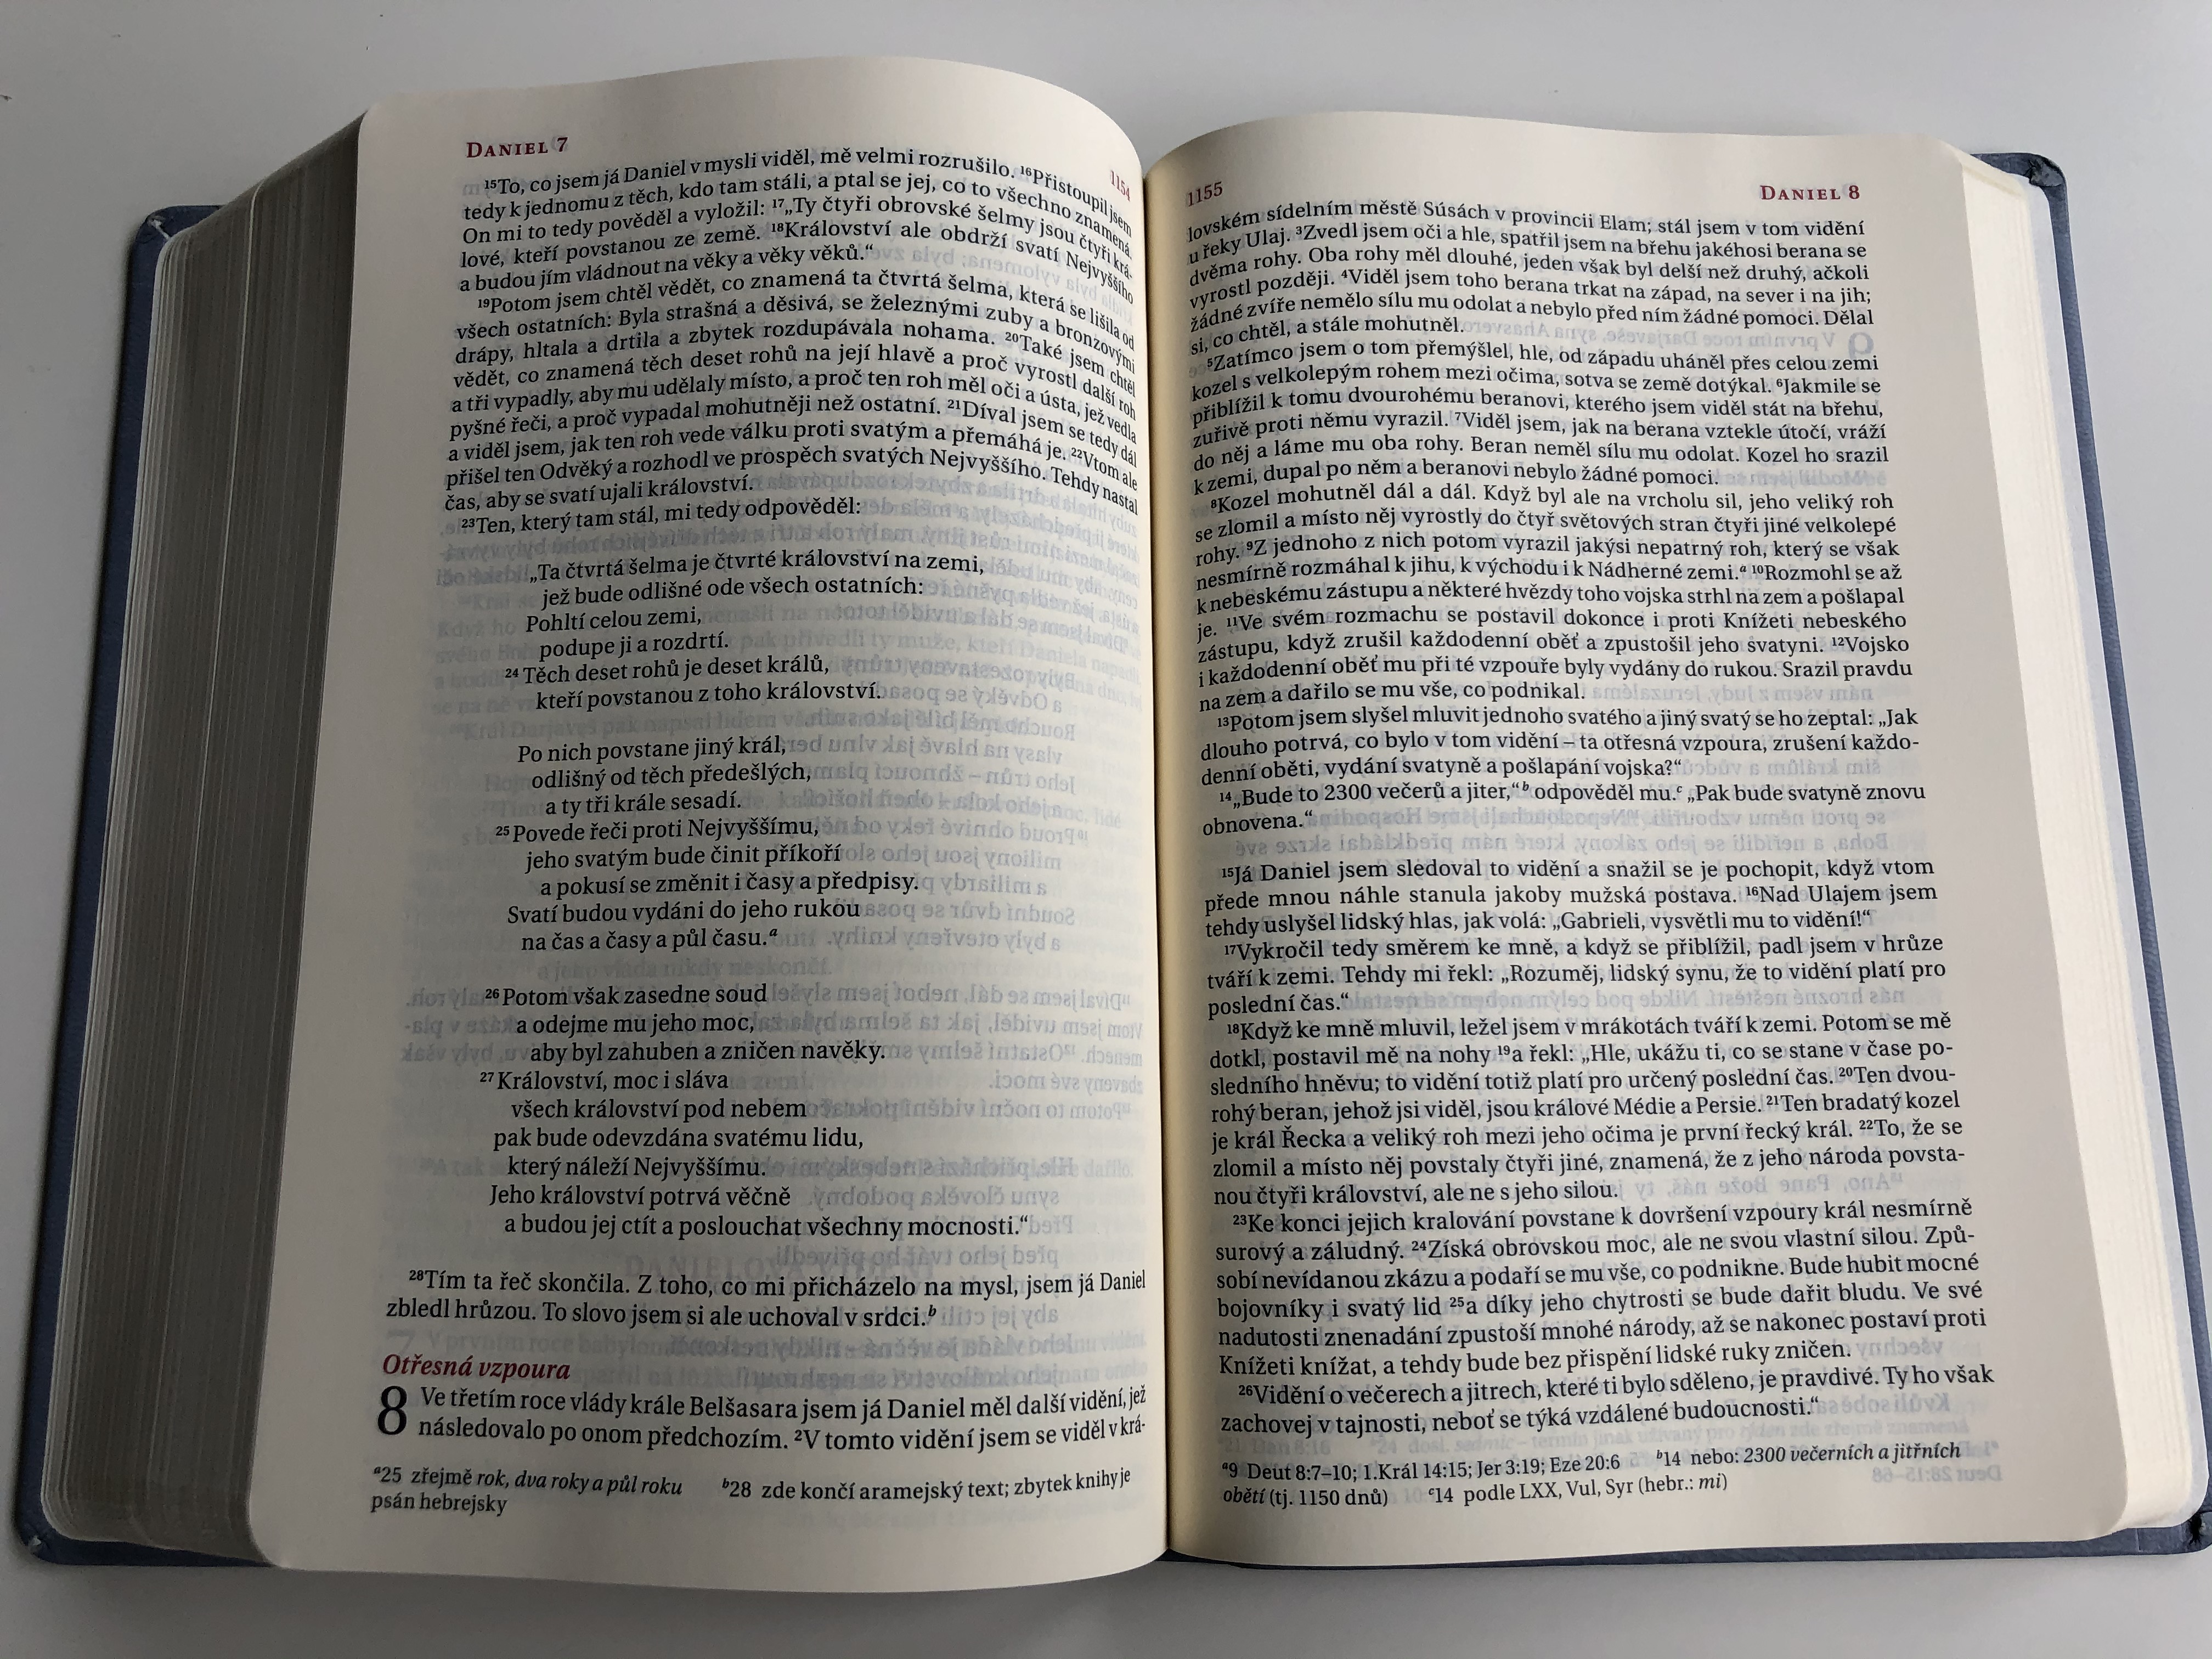 czech-language-bible-grayblue-21st-century-translation-imitation-leather-cover-14.jpg